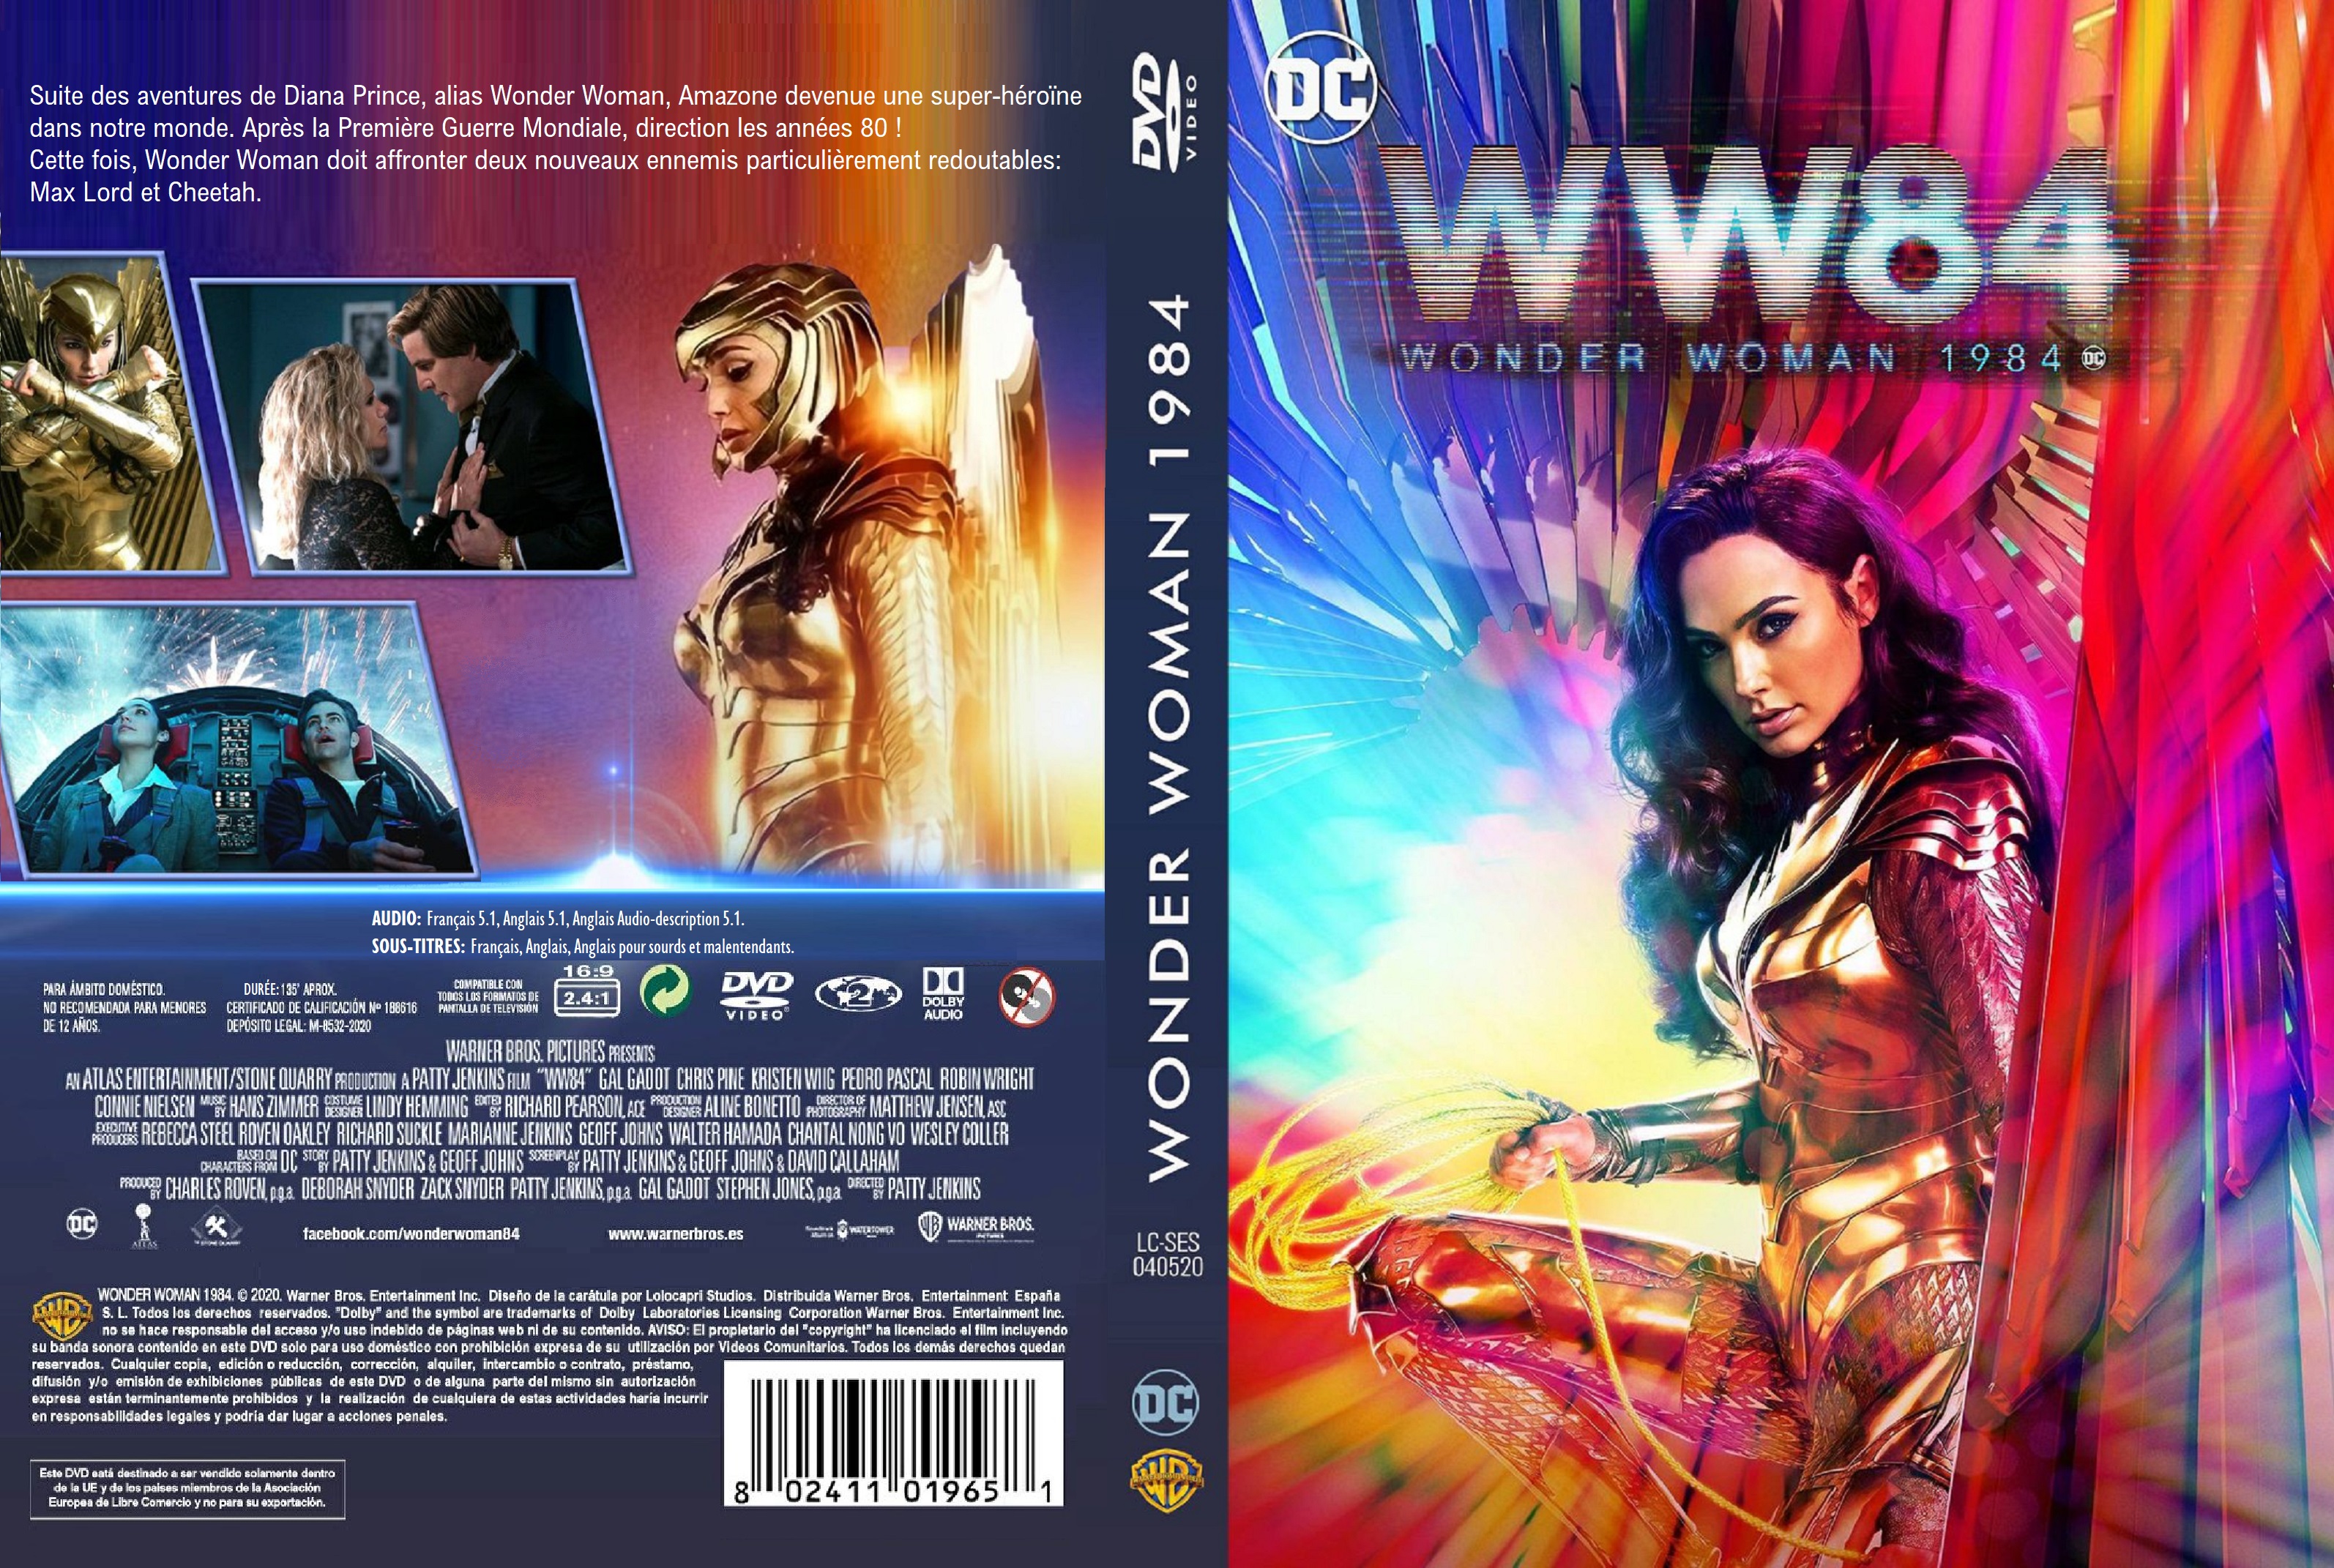 Jaquette DVD Wonder Woman 1984 custom v2